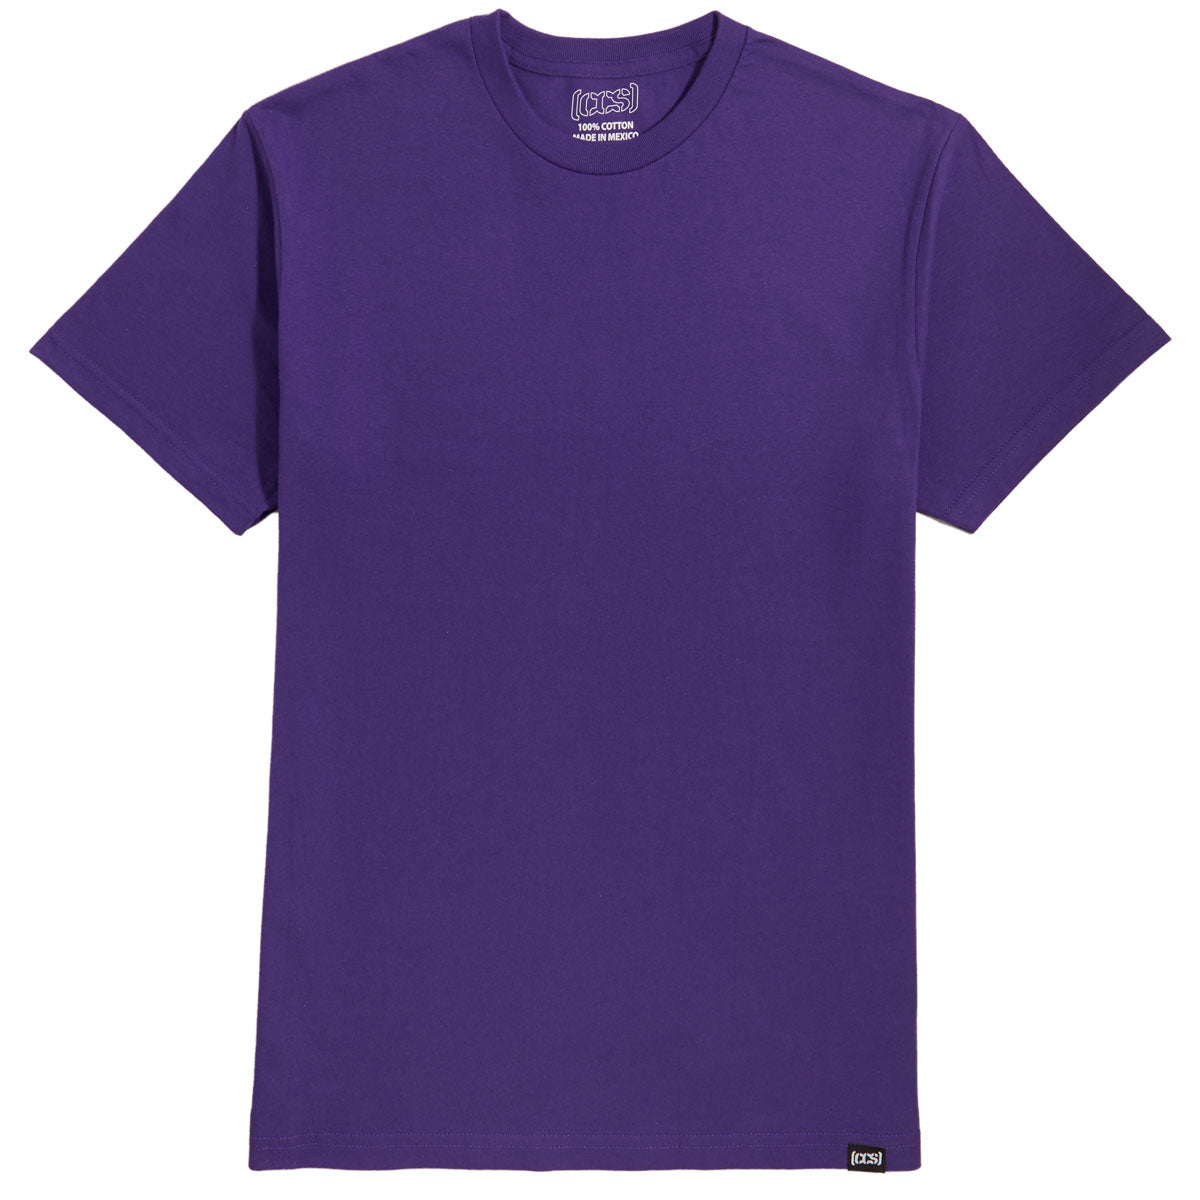 CCS Original Heavyweight T-Shirt - Purple image 1